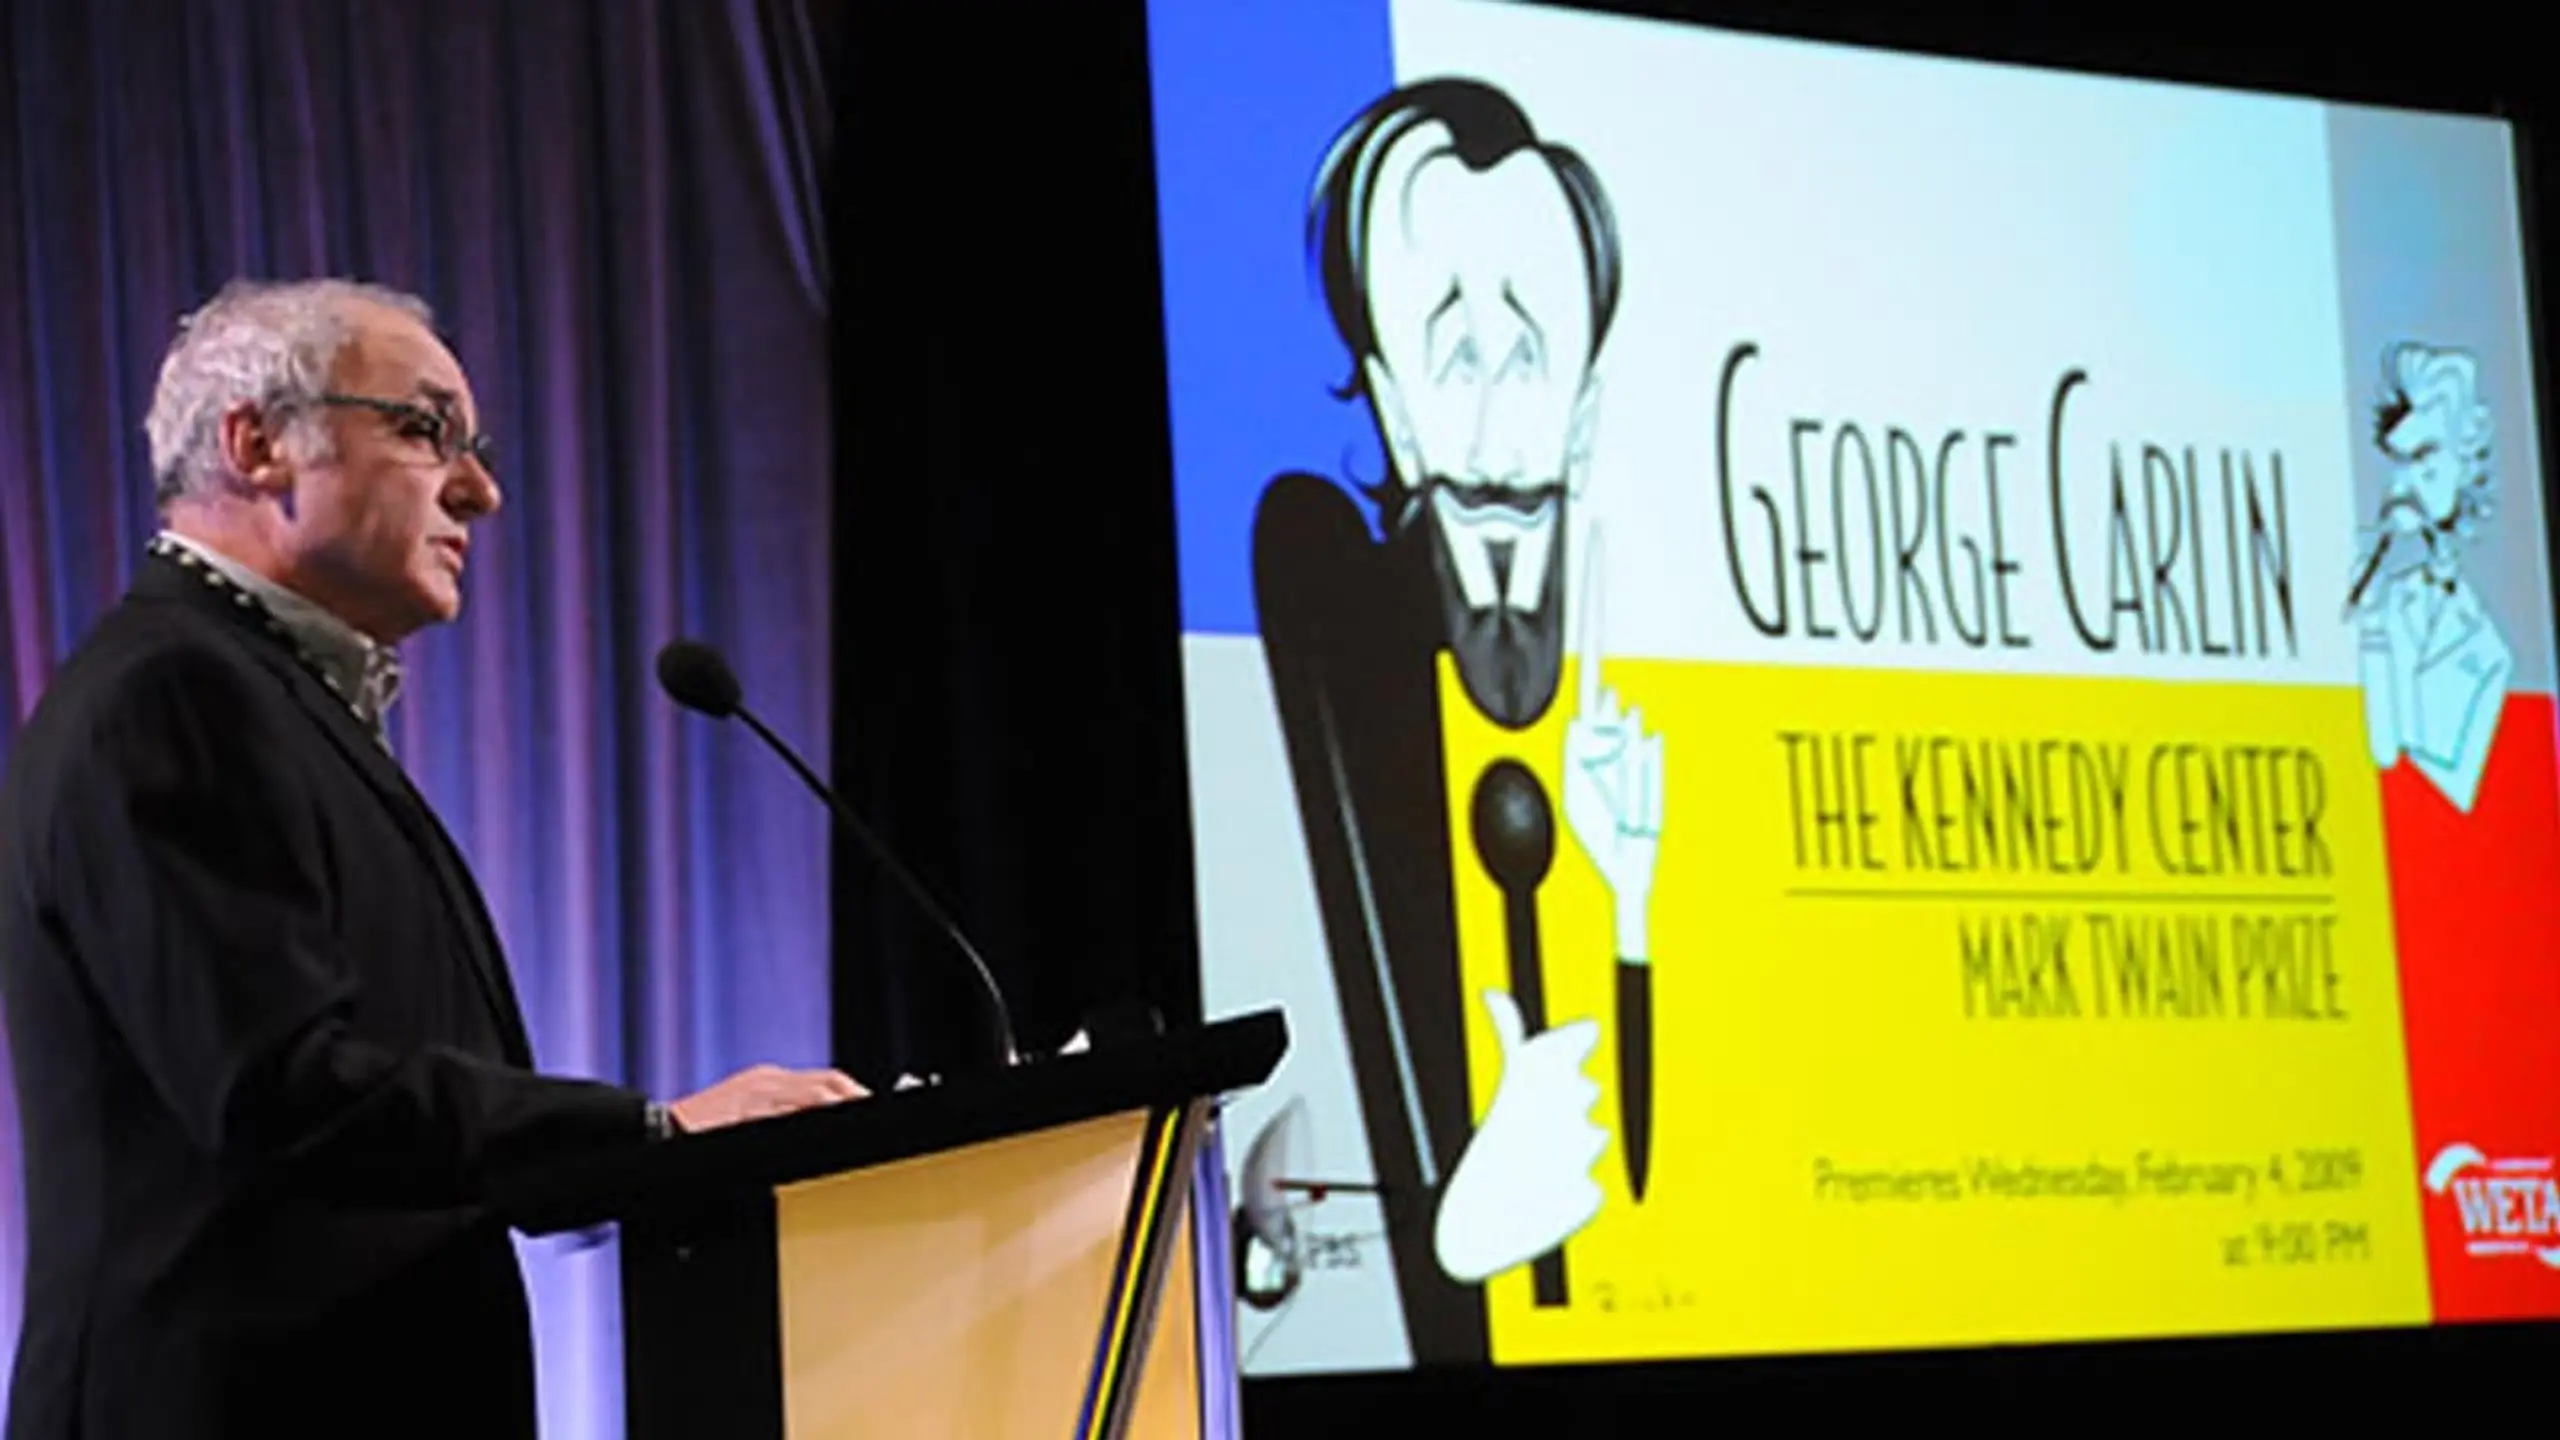 George Carlin : The Kennedy Center Mark Twain Prize